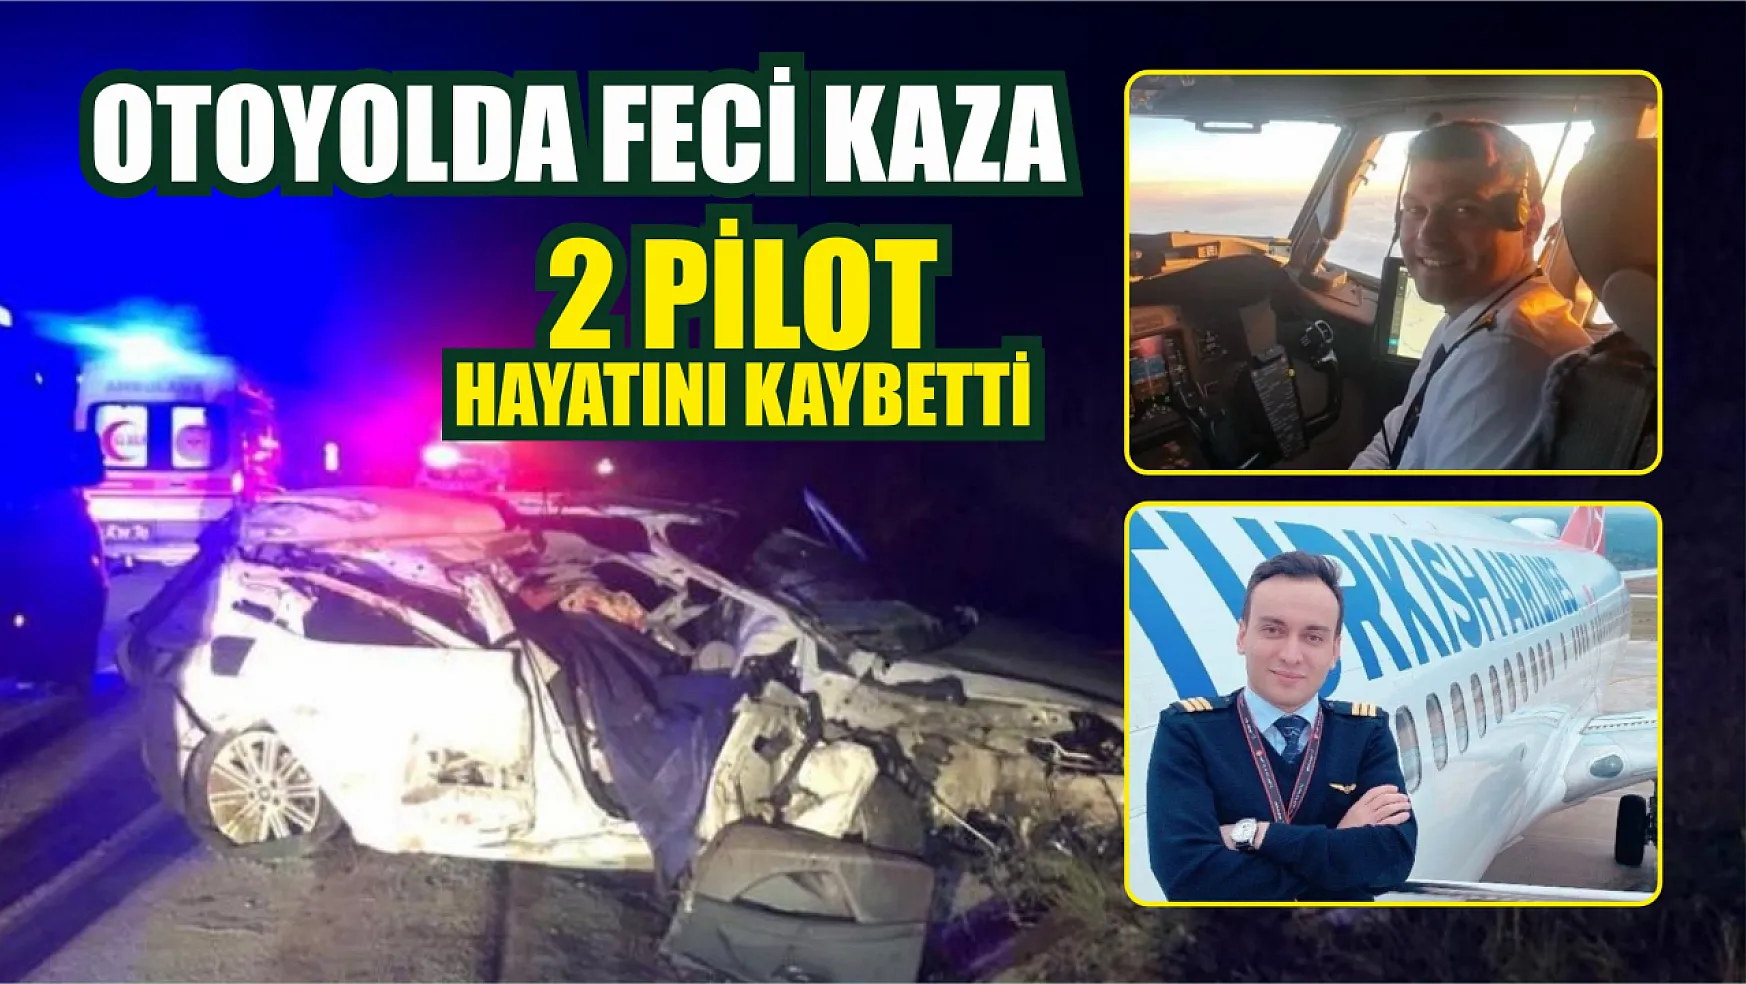 Kuzey Marmara Otoyolu'nda feci kaza: 2 pilot hayatını kaybetti